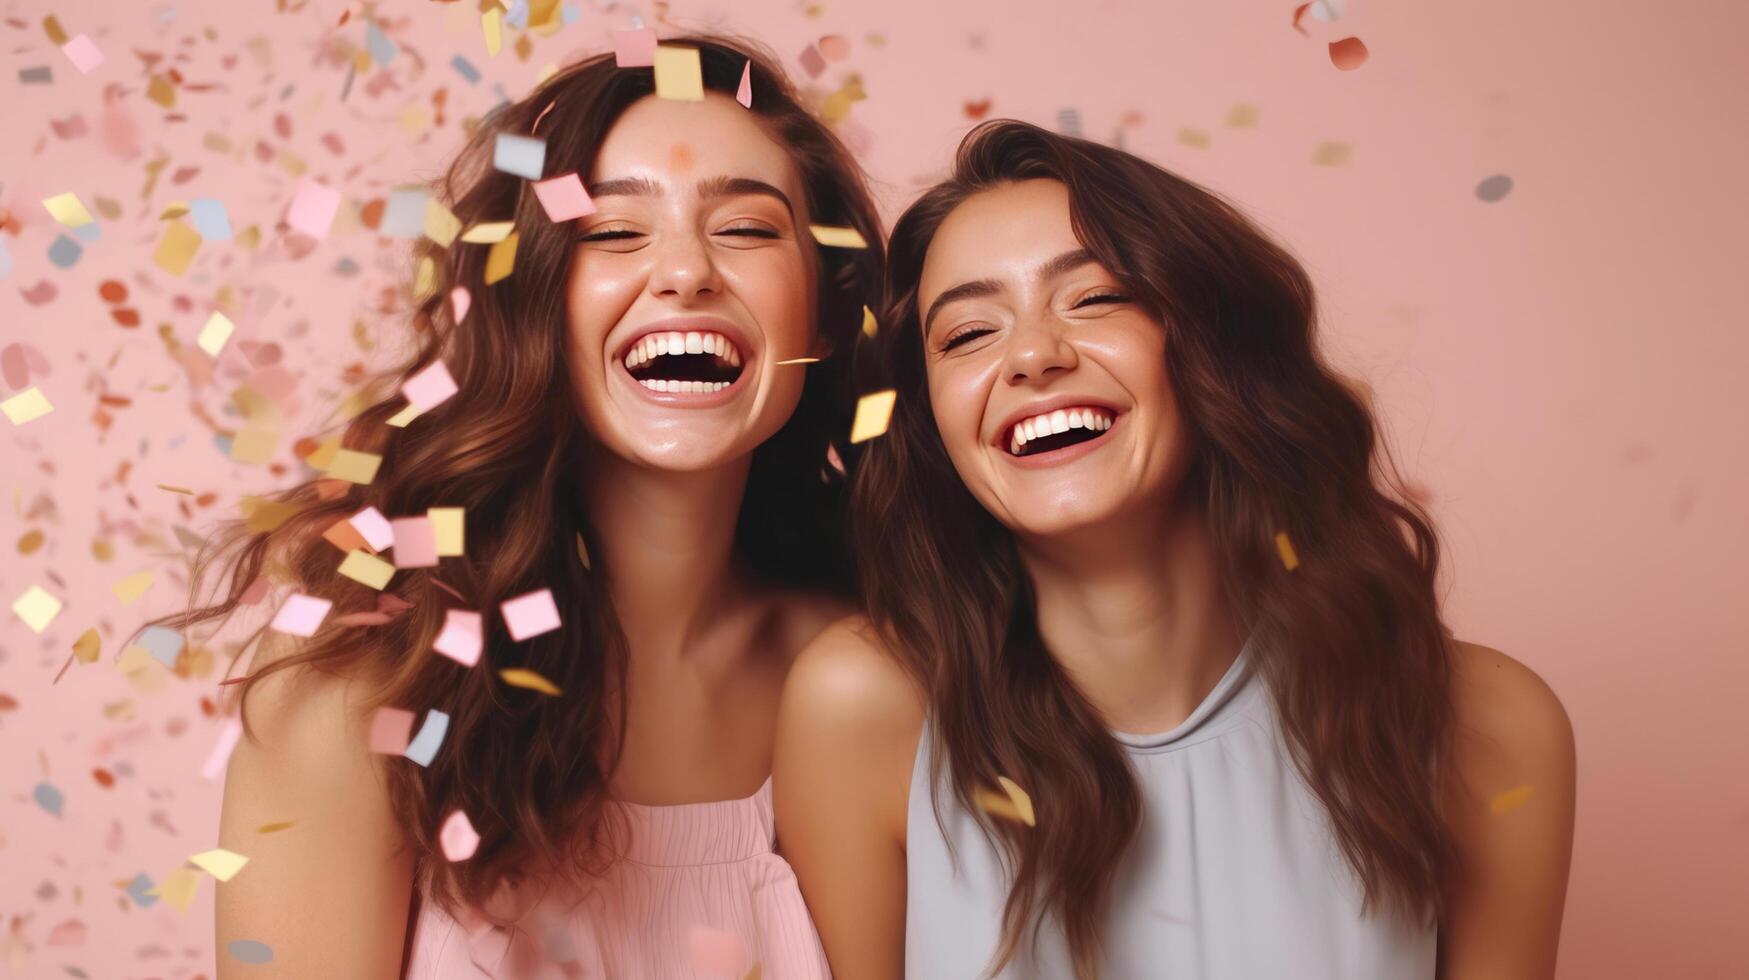 Happy girls with confetti. Illustration photo